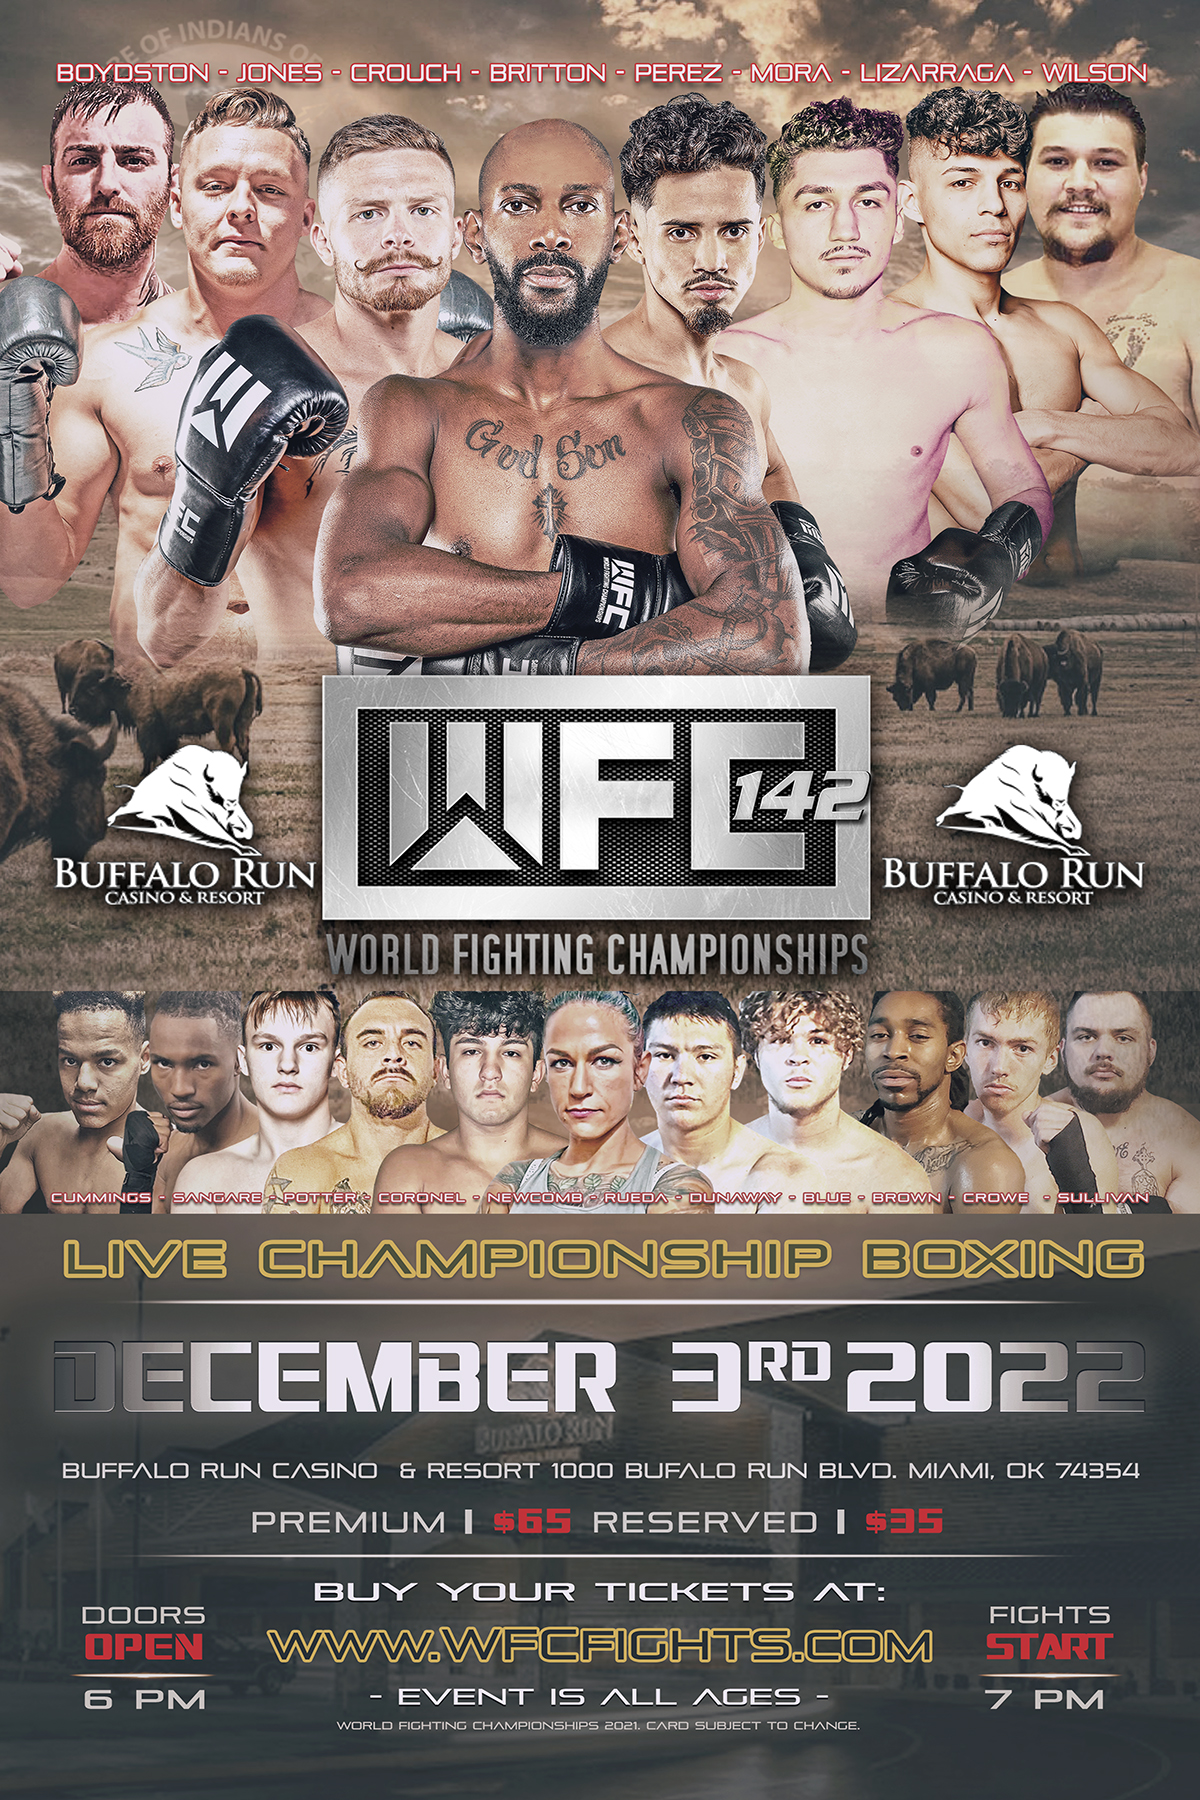 WFC 142 LIVE BOXING Saturday December 3rd,2022 at Buffalo Run Casino